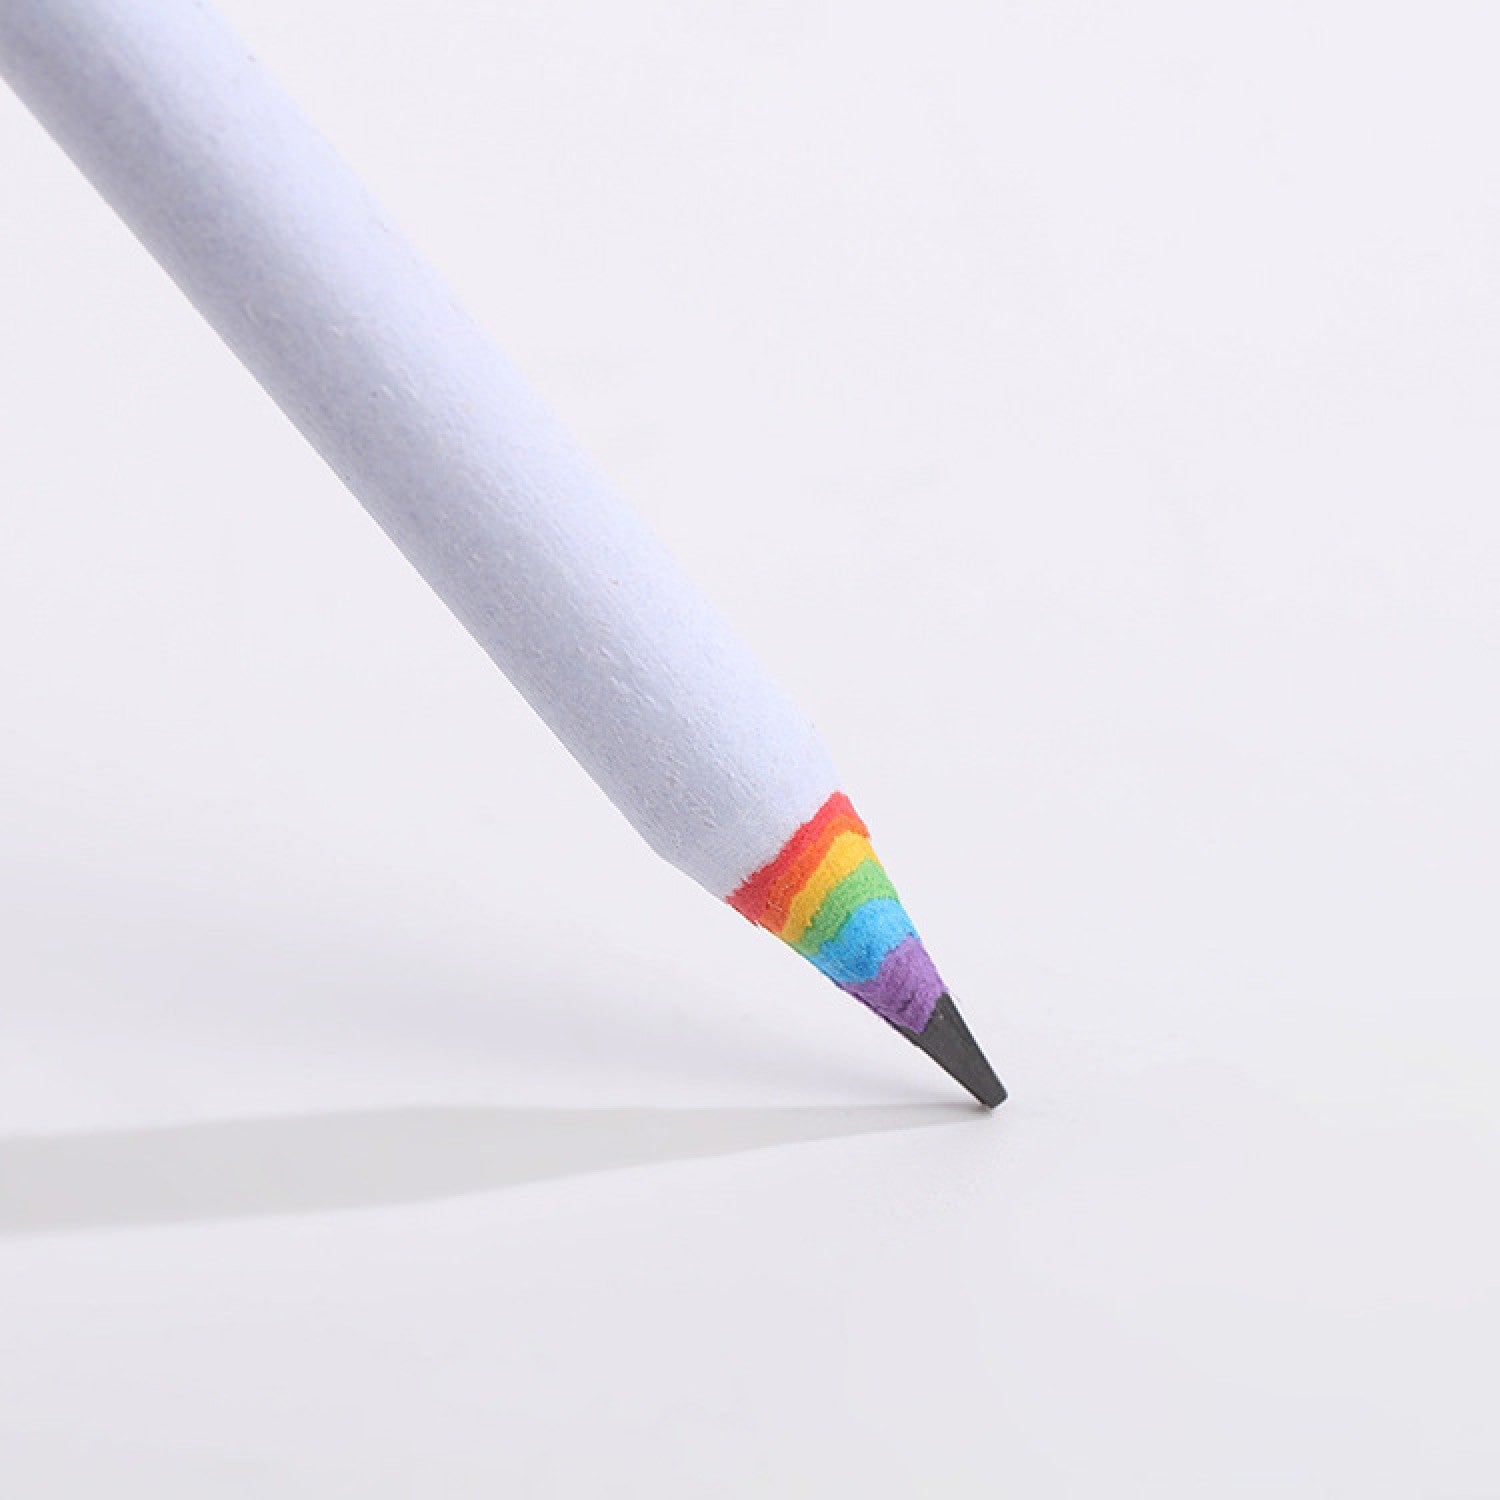 Creion Rainbow - Adda Gifts 